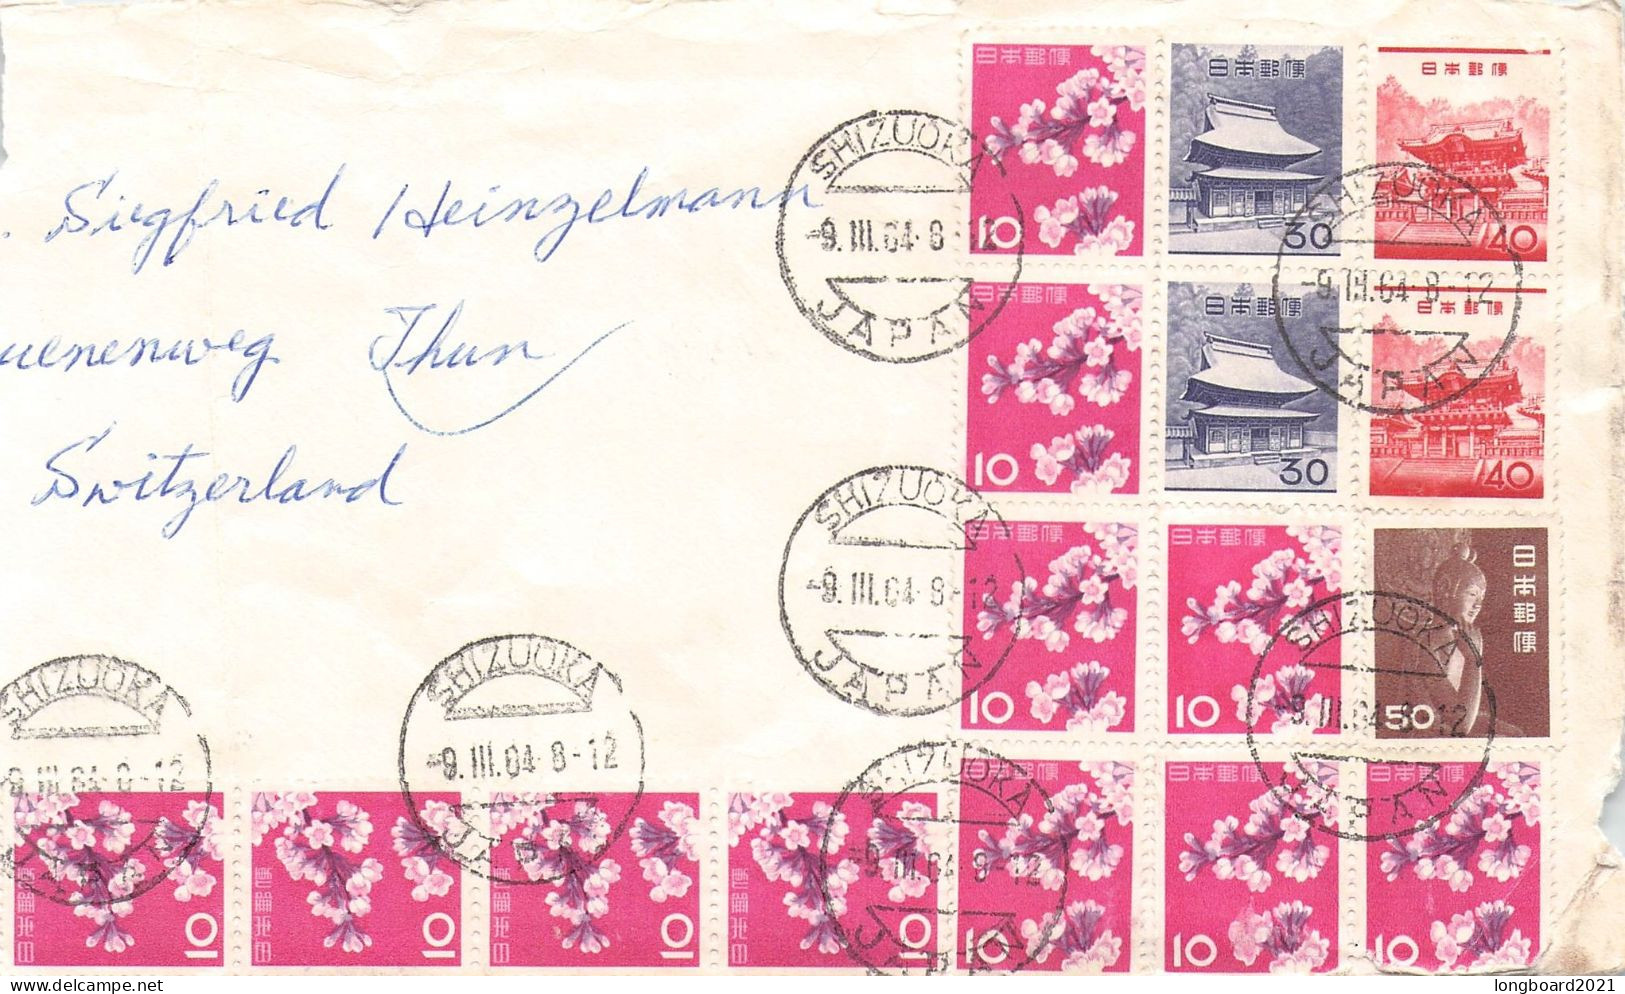 JAPAN - FRAGMENT 1964 - SUISSE / 1206 - Covers & Documents